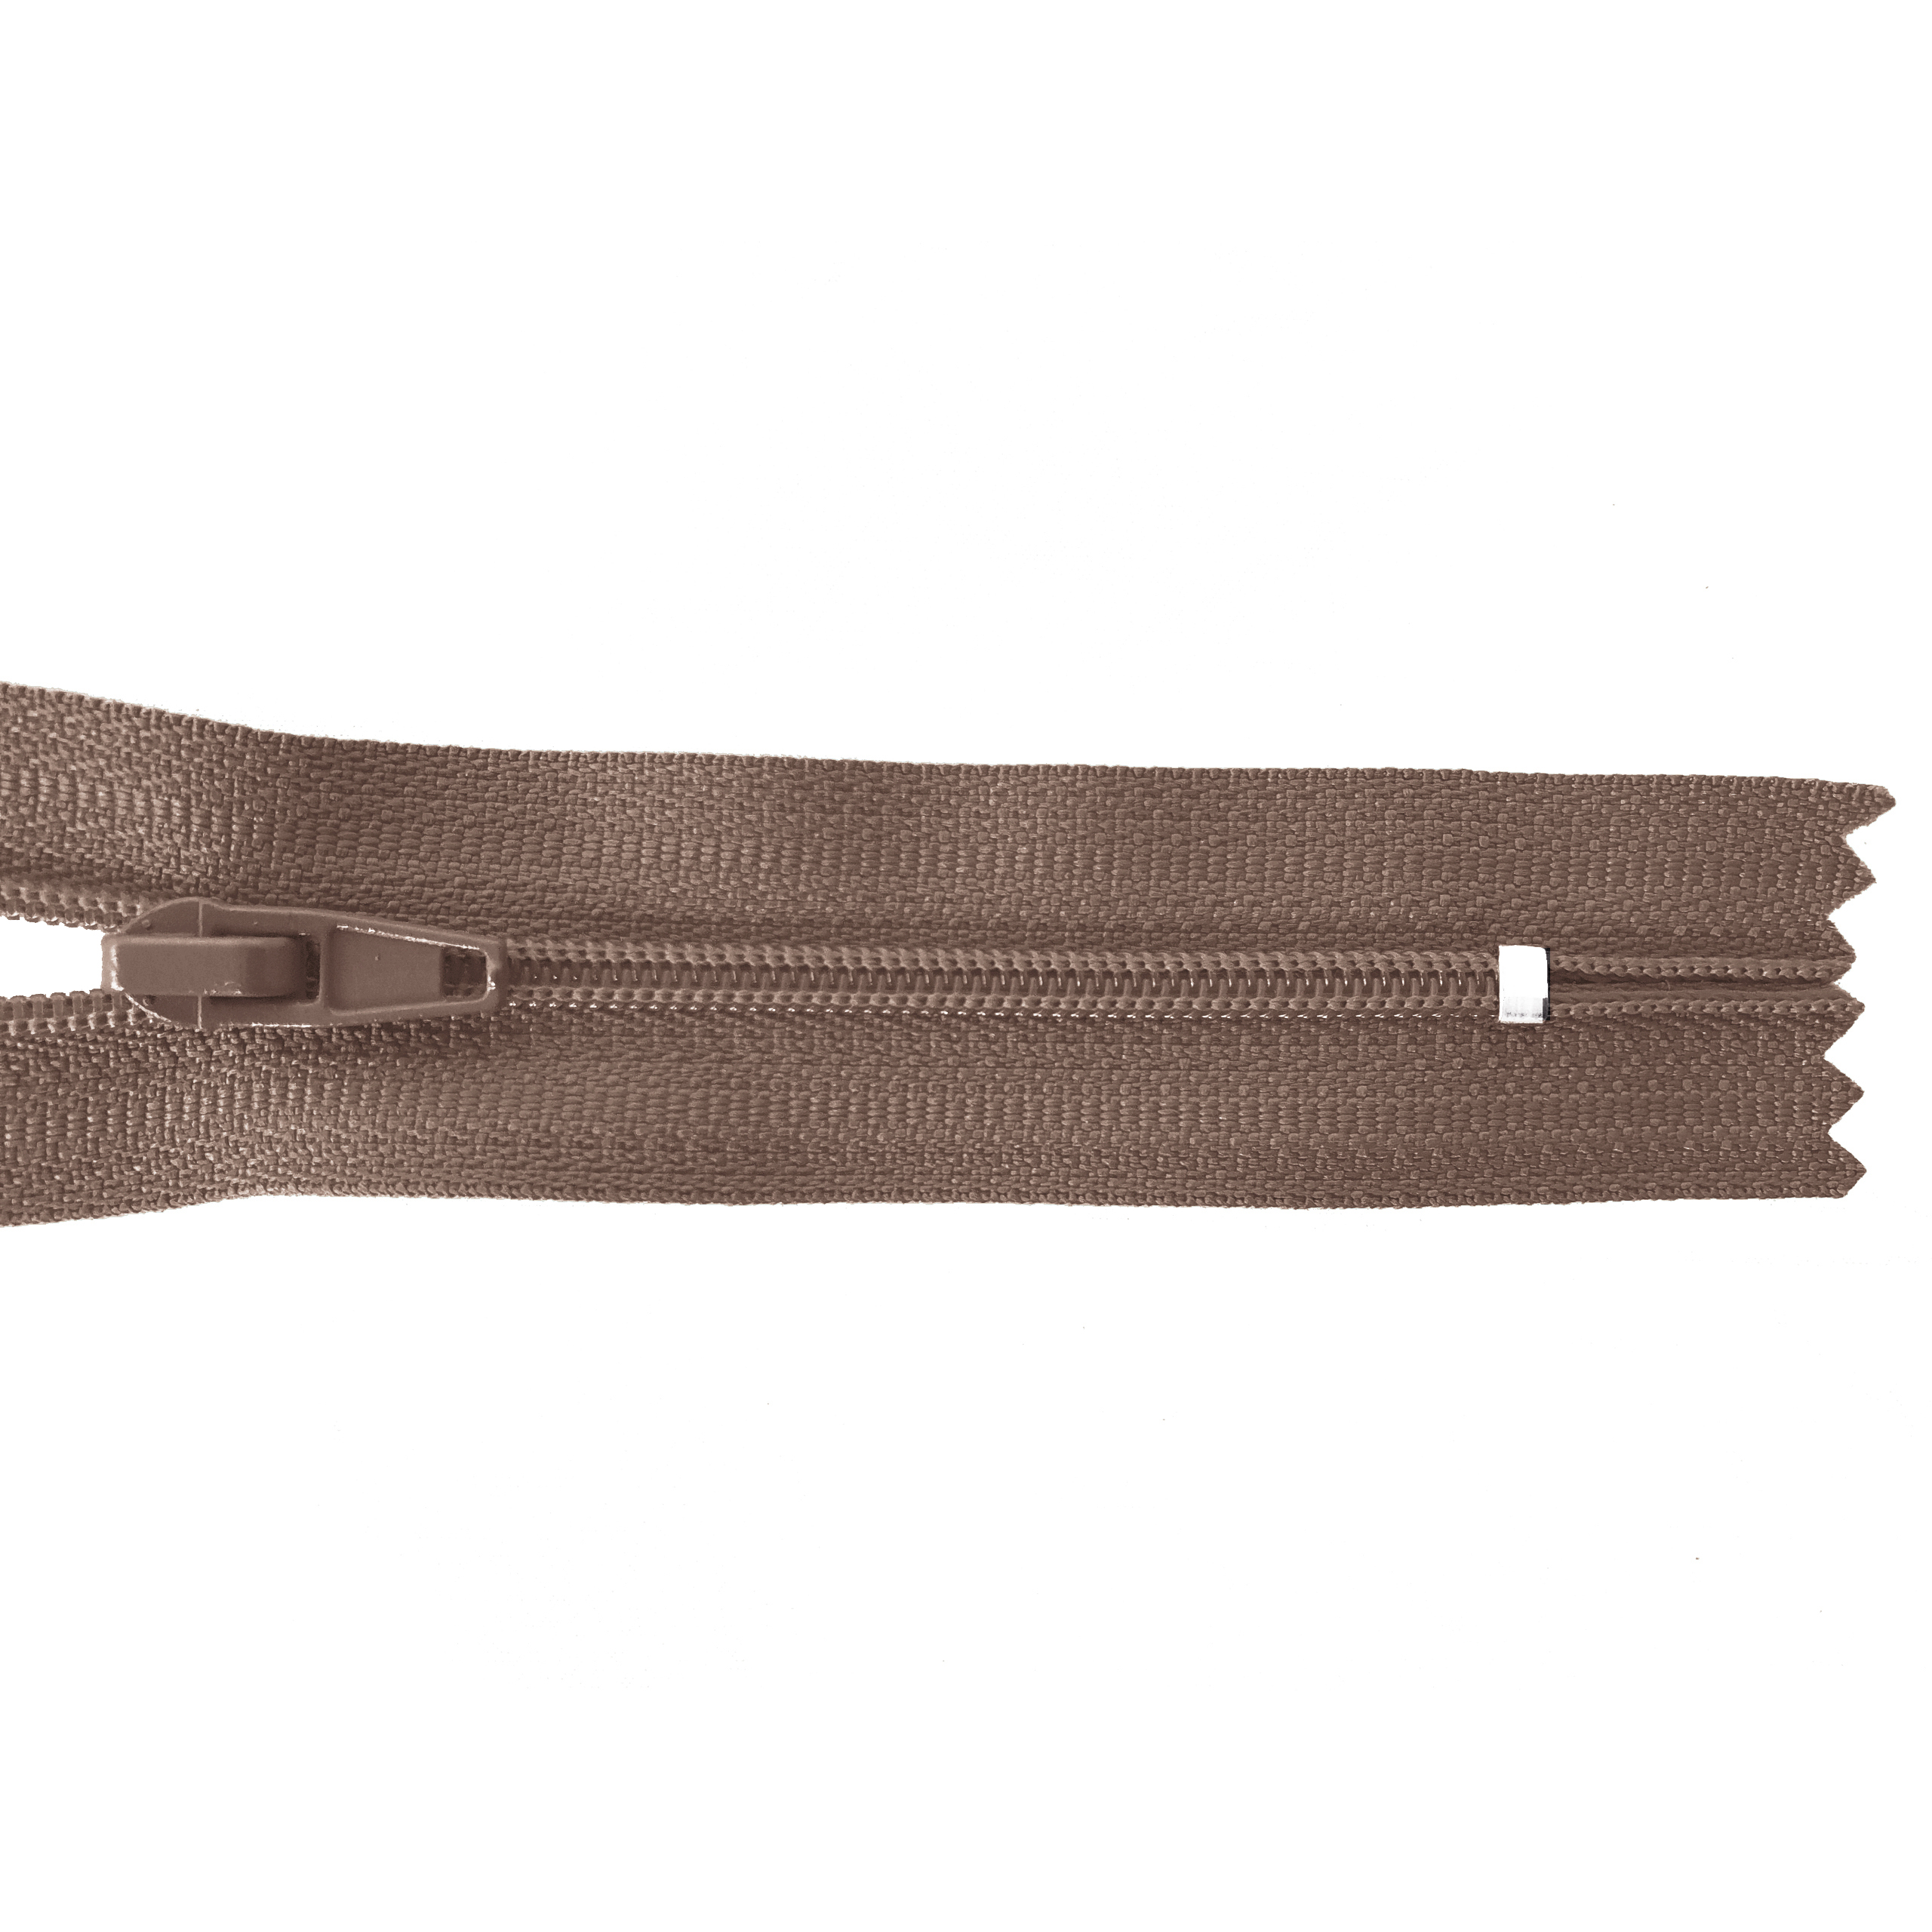 Reißverschluss 50cm, nicht teilbar, PES-Spirale fein, d.grau-braun, hochwertiger Marken-Reißverschluss von Rubi/Barcelona